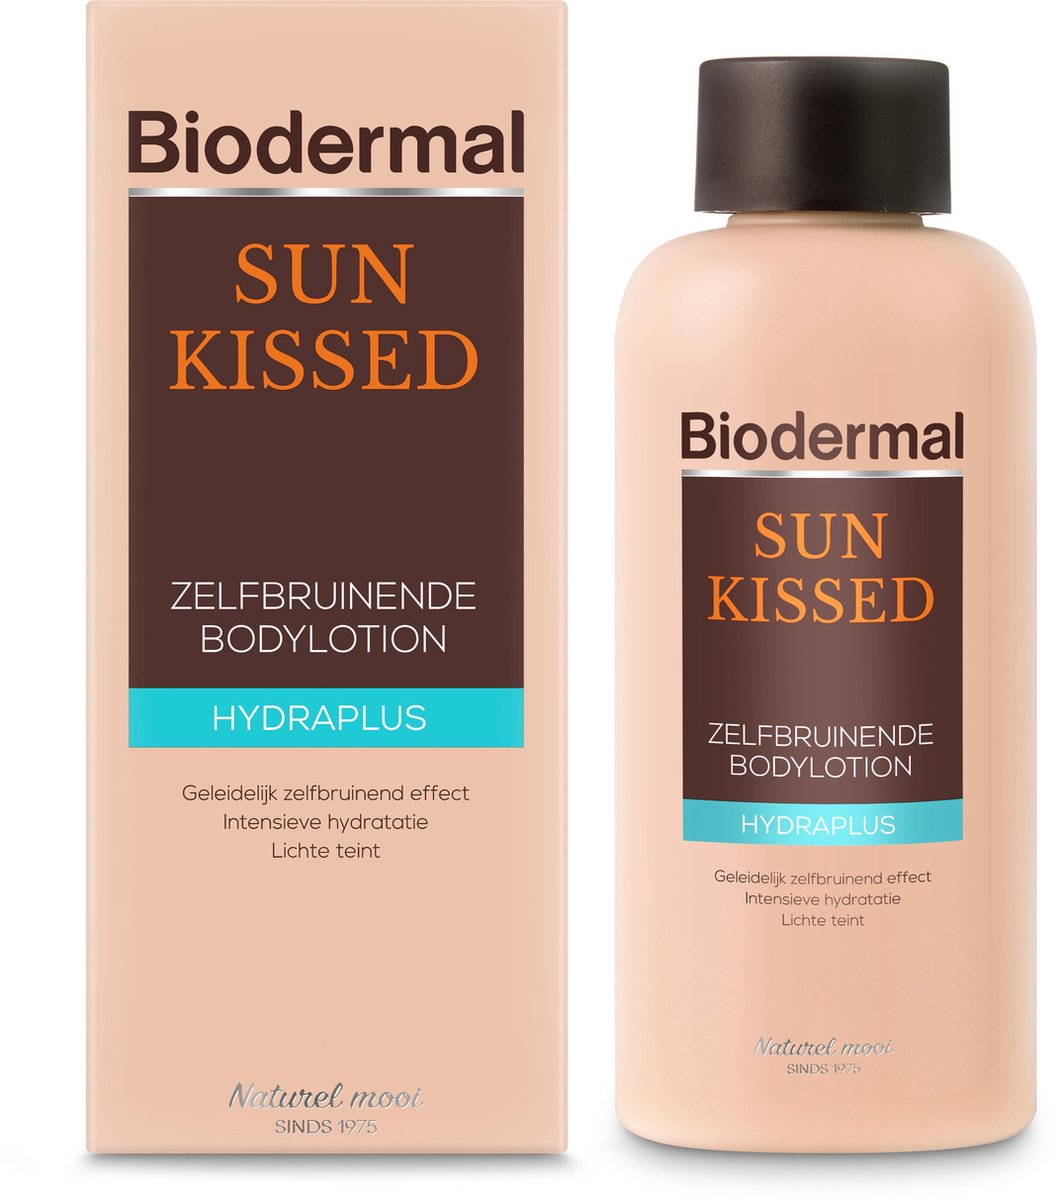 Biodermal Self Tan Sun Kissed body lotion - Zelfbruinende lotion voor lichaam en gezicht - 200ml NL - Biodermal